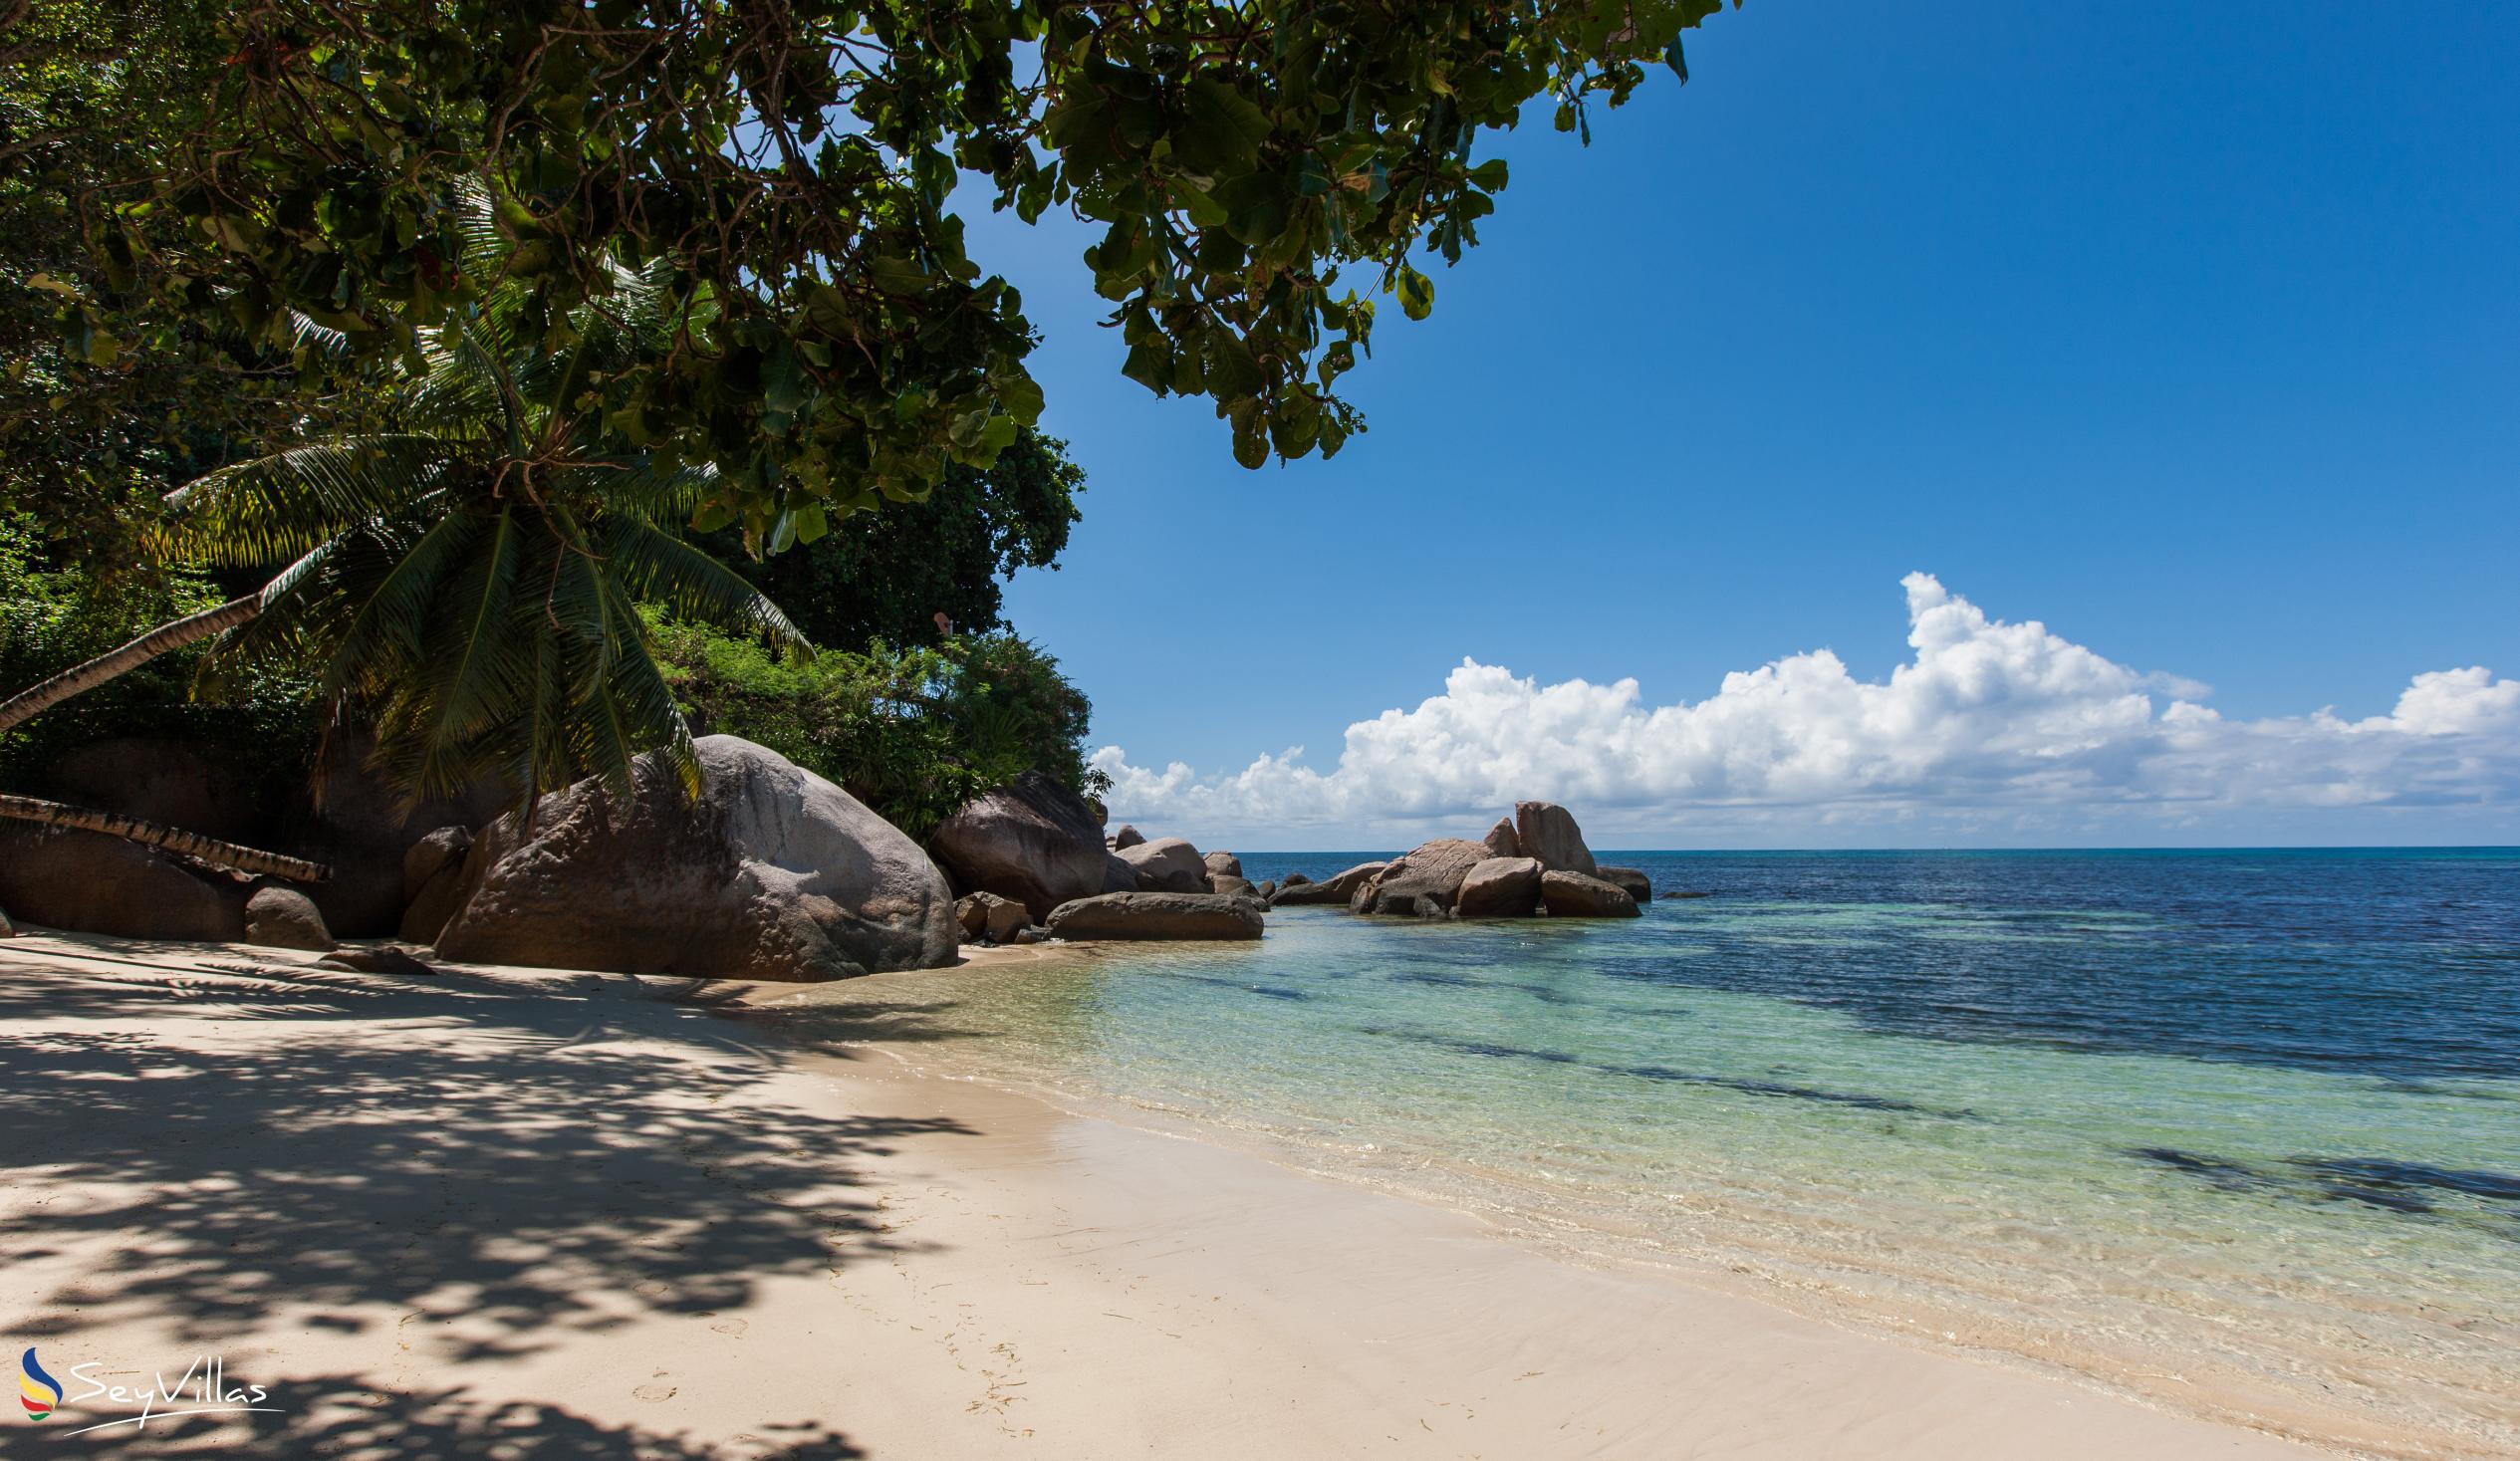 Photo 2: Anse Cimitière - Praslin (Seychelles)